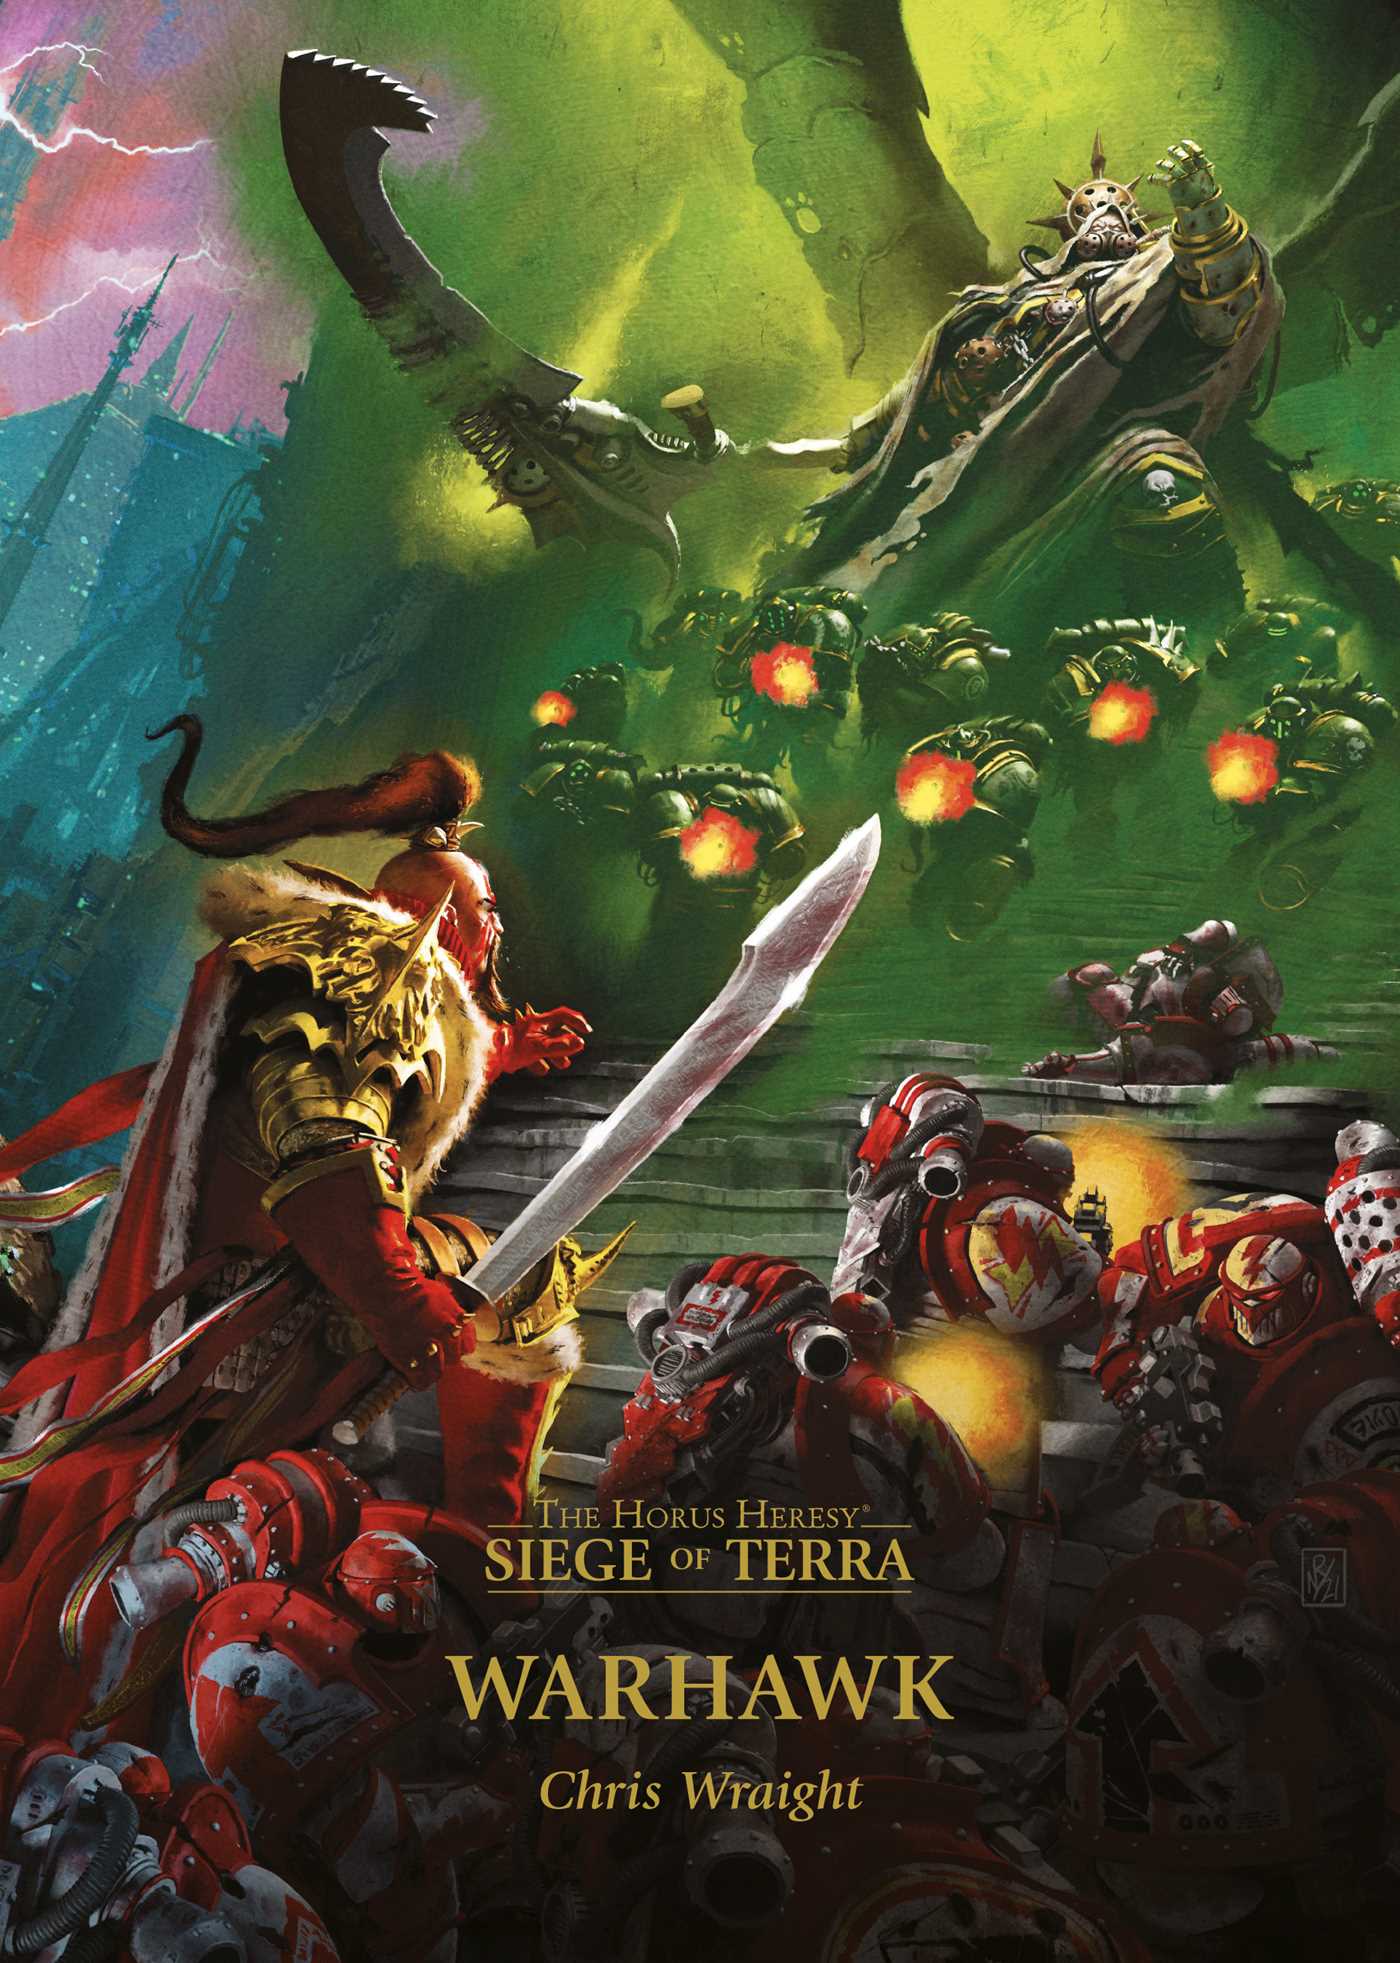 Warhawk (The Siege of Terra #6)